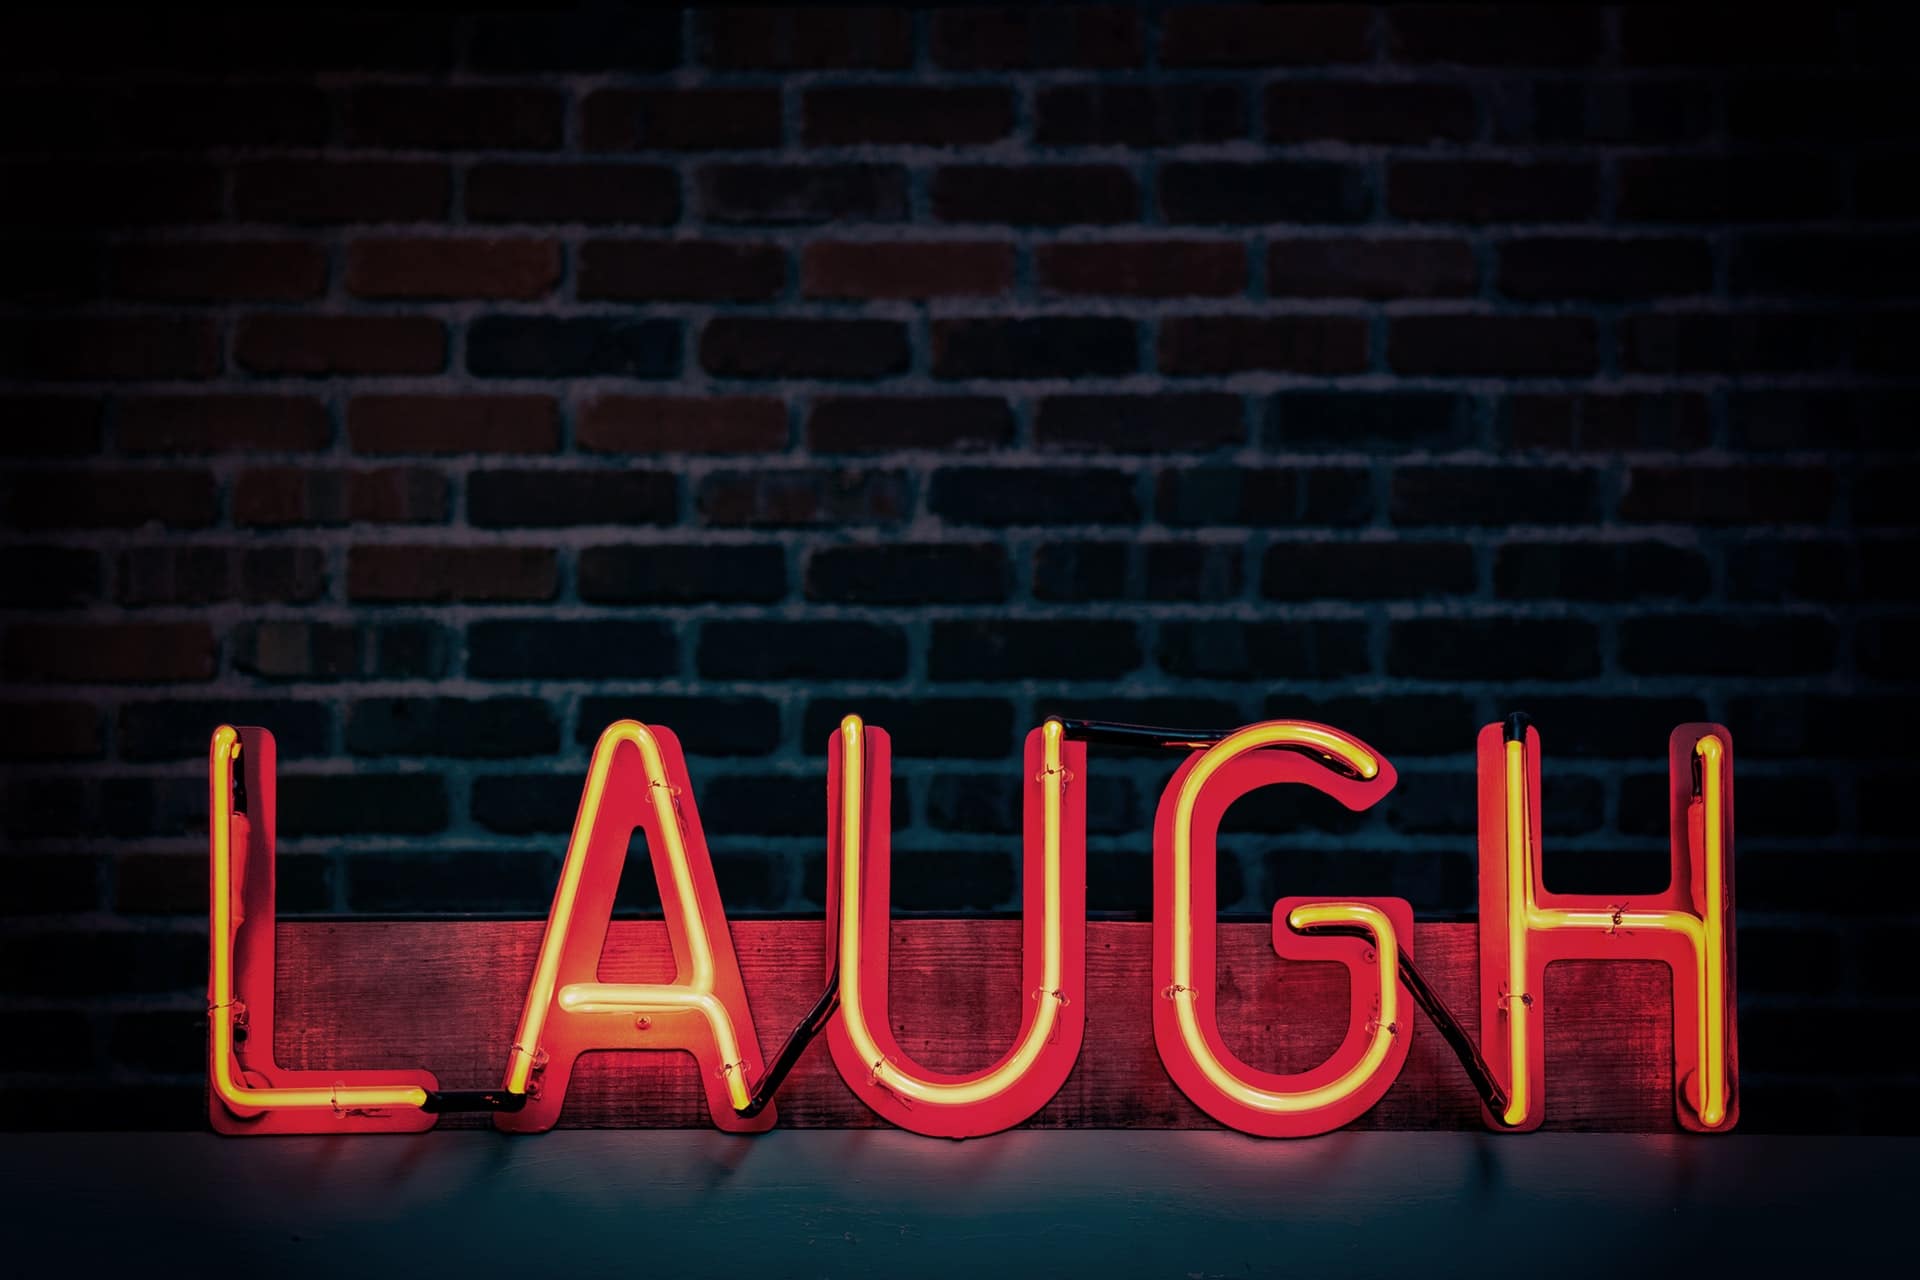 台灣最不怕上法院的男人｜字體笑話 laugh neon light signage turned on brick wall joke